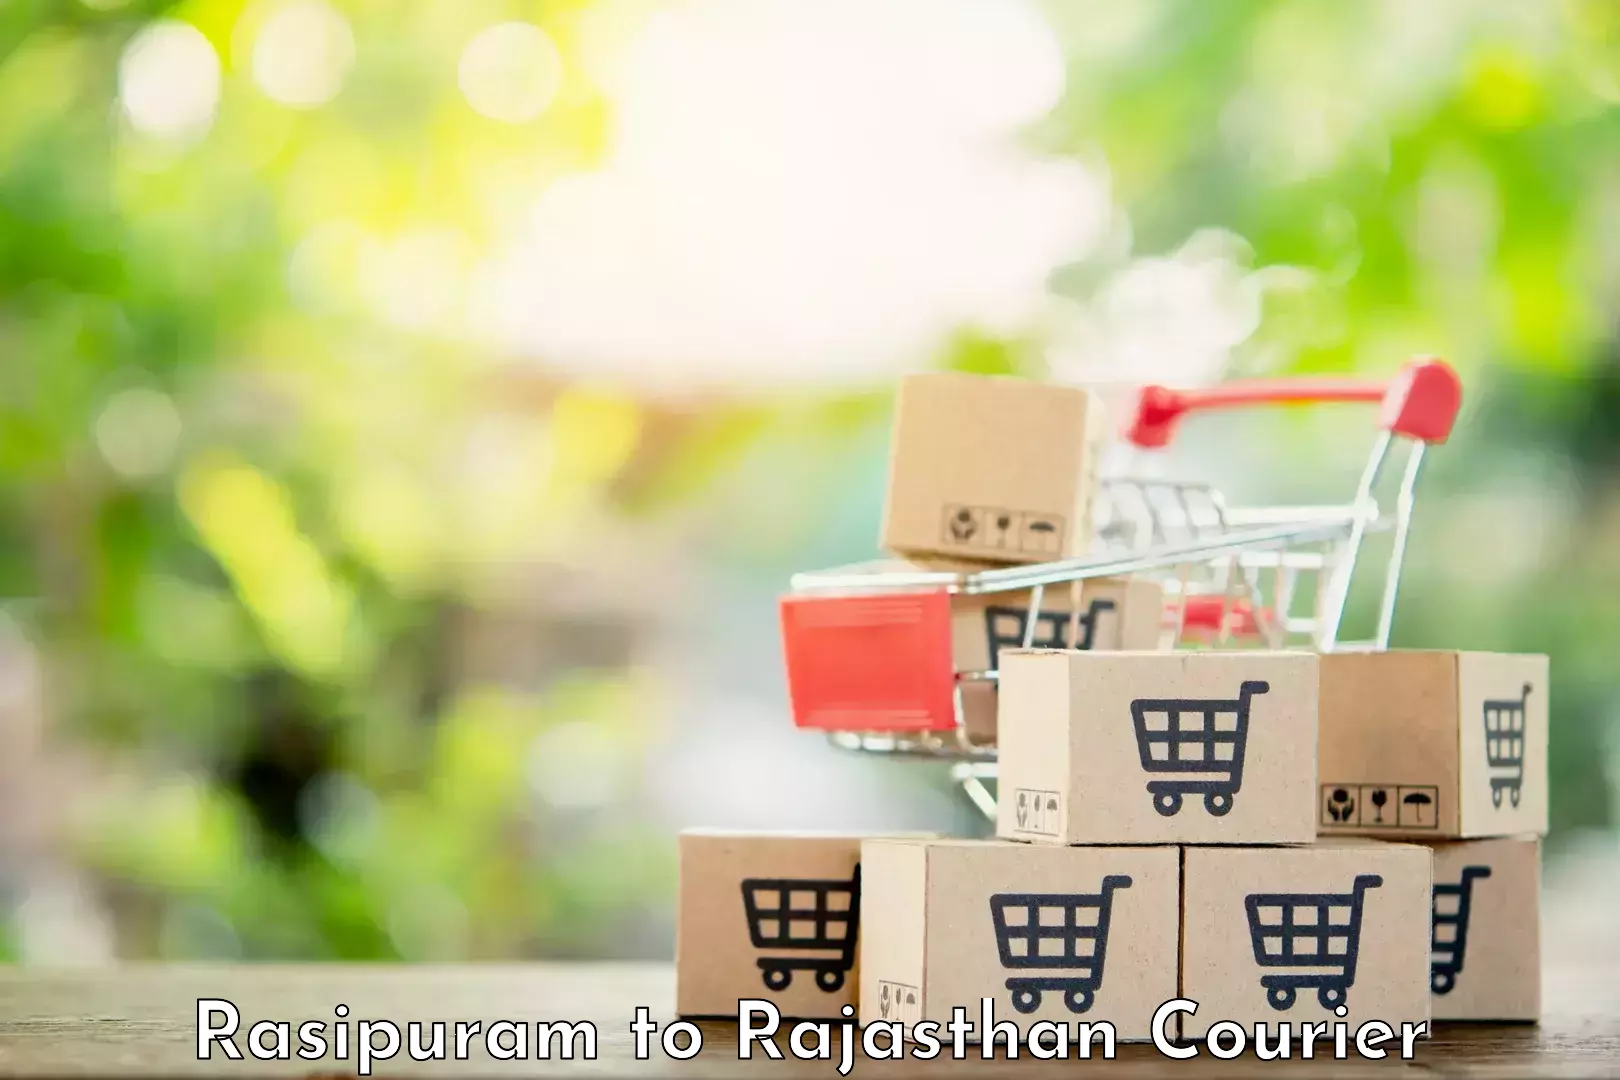 Courier membership in Rasipuram to Rajasthan